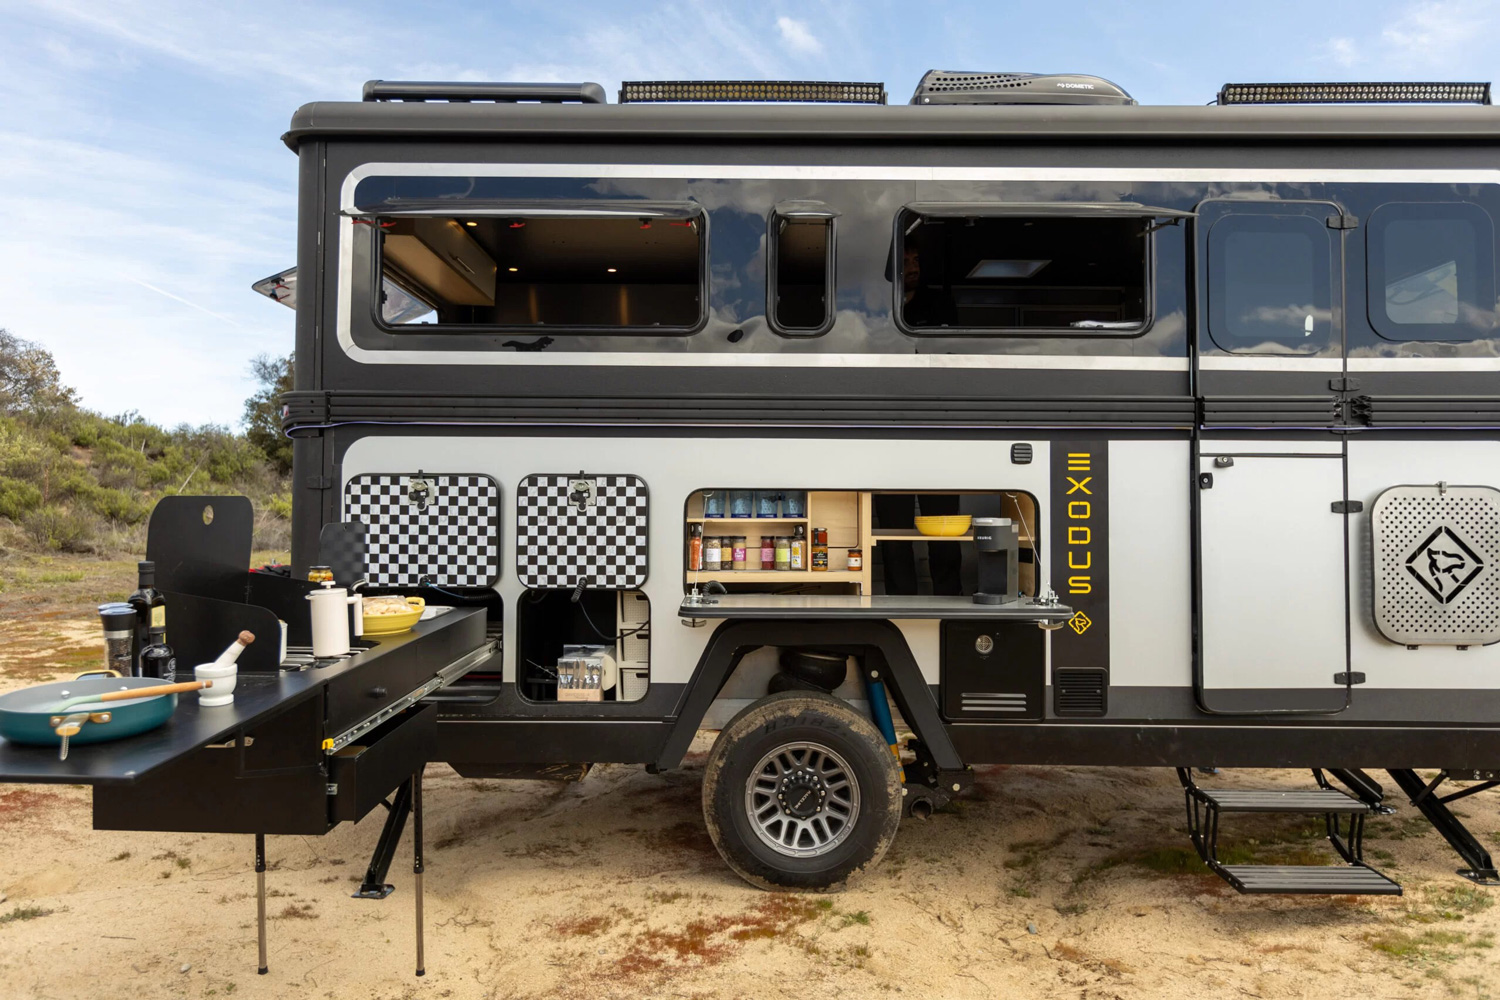 Exodus Capax travel trailer setup at camp in the desert.